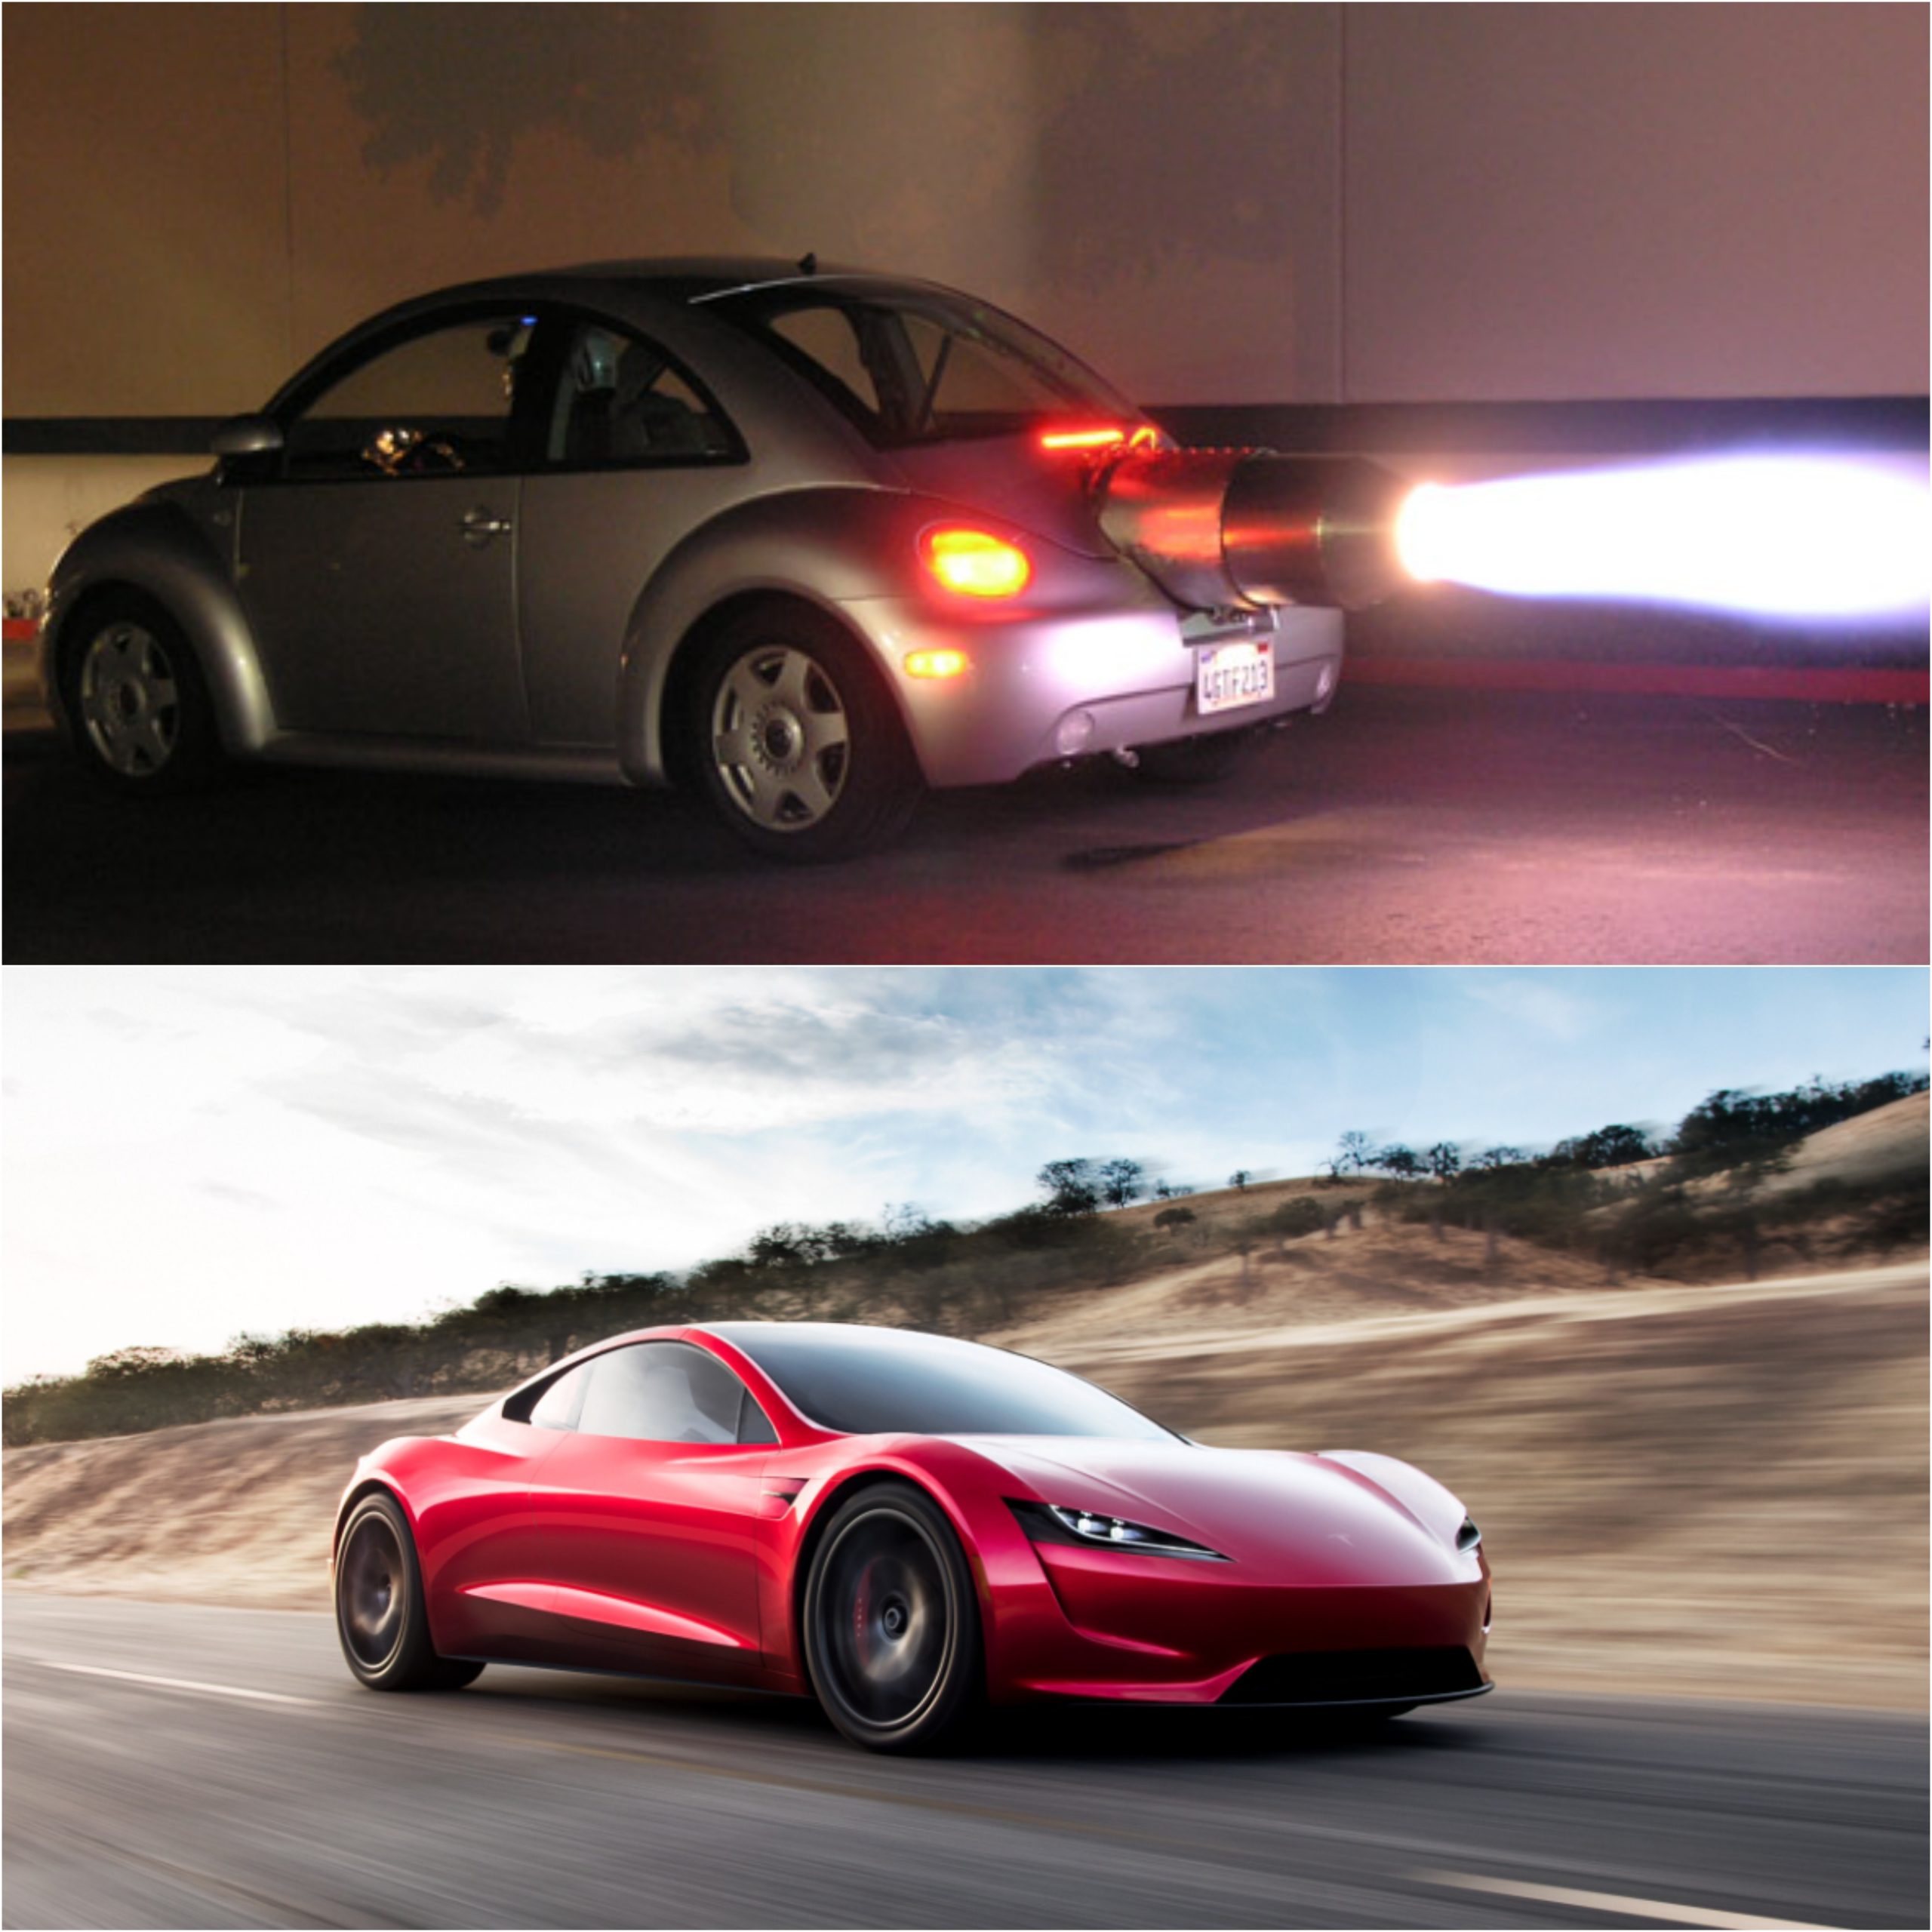 Jet Powered Beetle (Top) And Rocket Powered Tesla (Bottom)